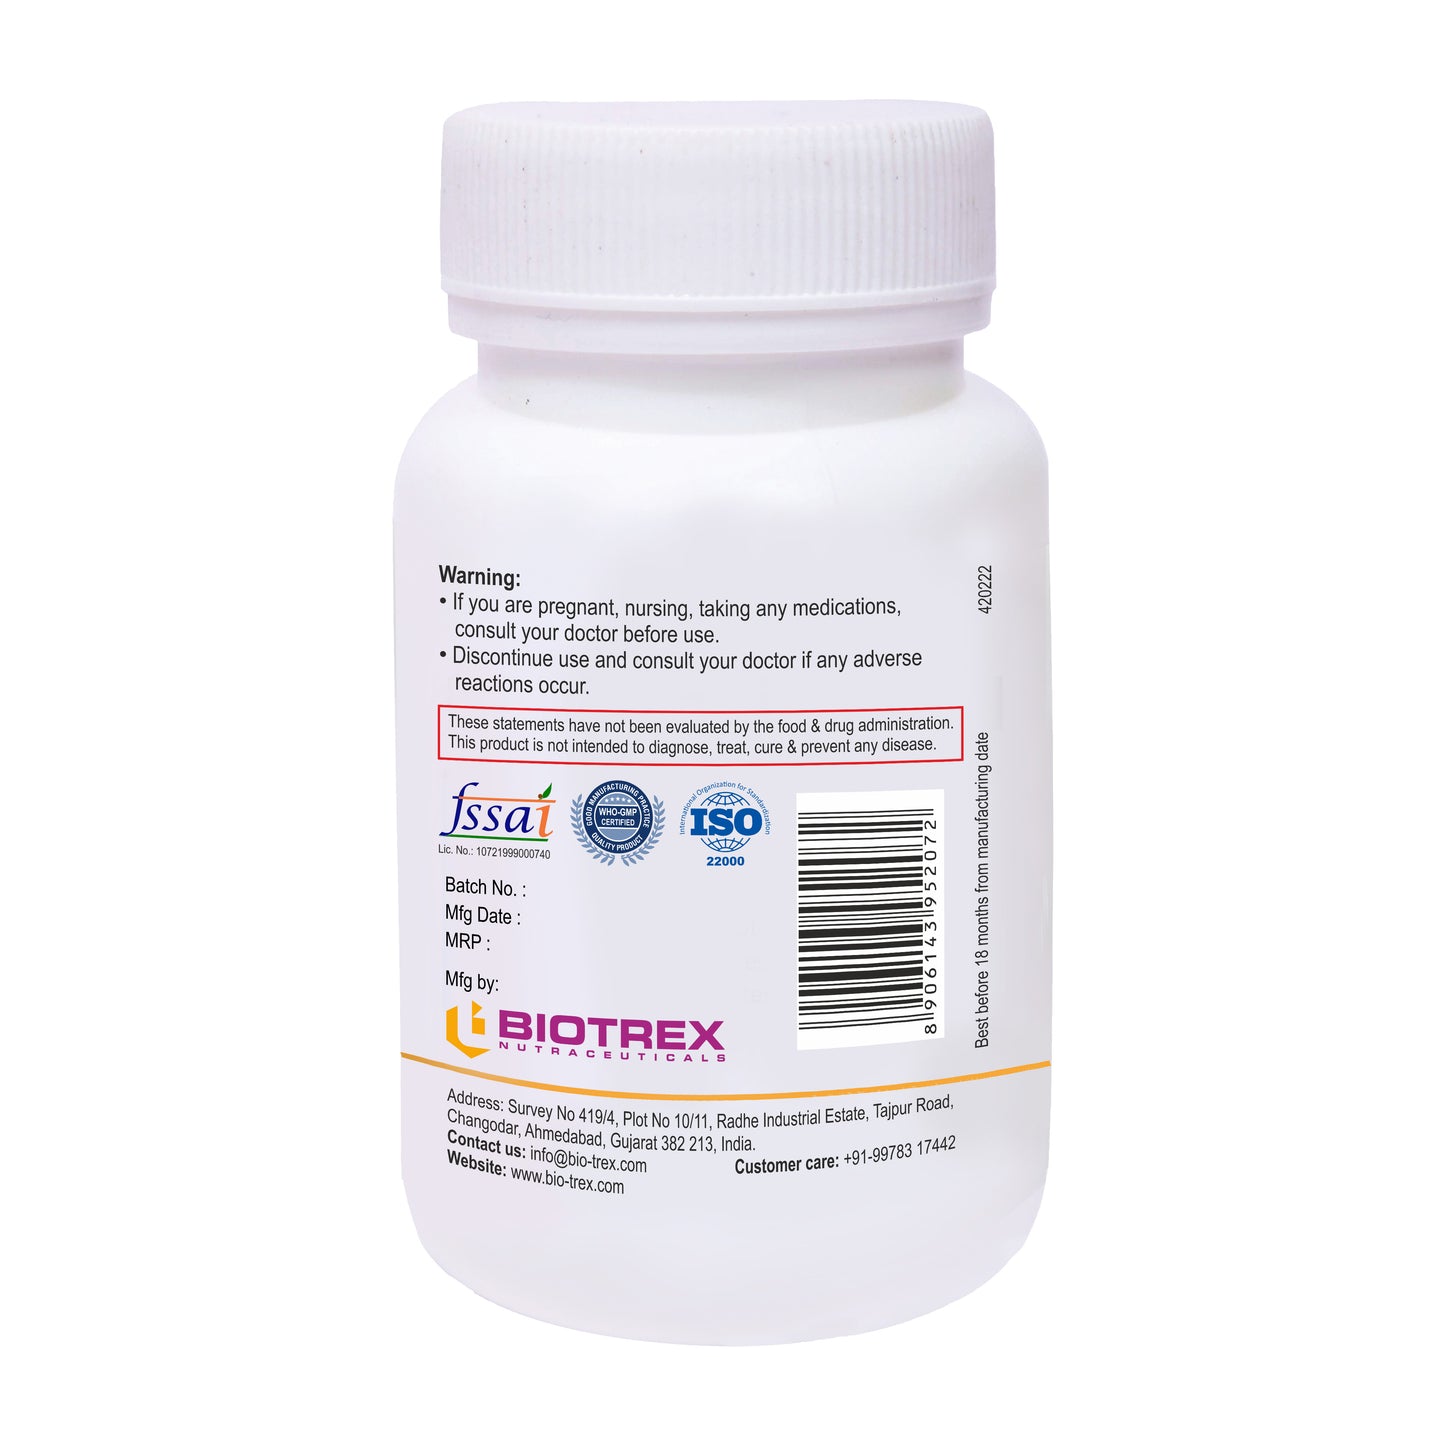 Biotrex Resveratrol 500mg - 60 Capsules Cognitive Health, Skin Health, Antioxidant Support & Cardiovascular Health